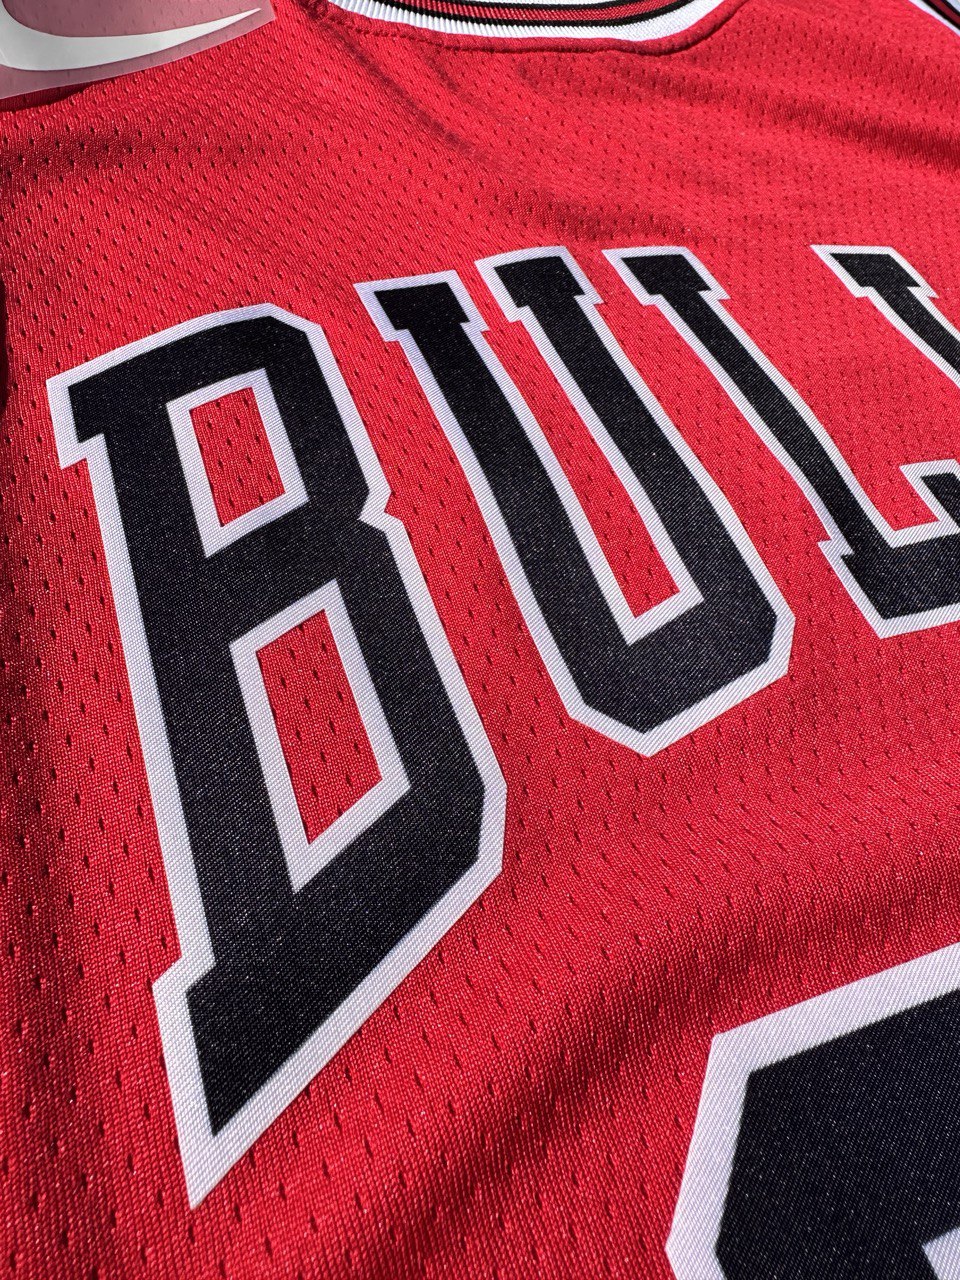 Swingman NBA player Michael Jordan Chicago Bulls #23